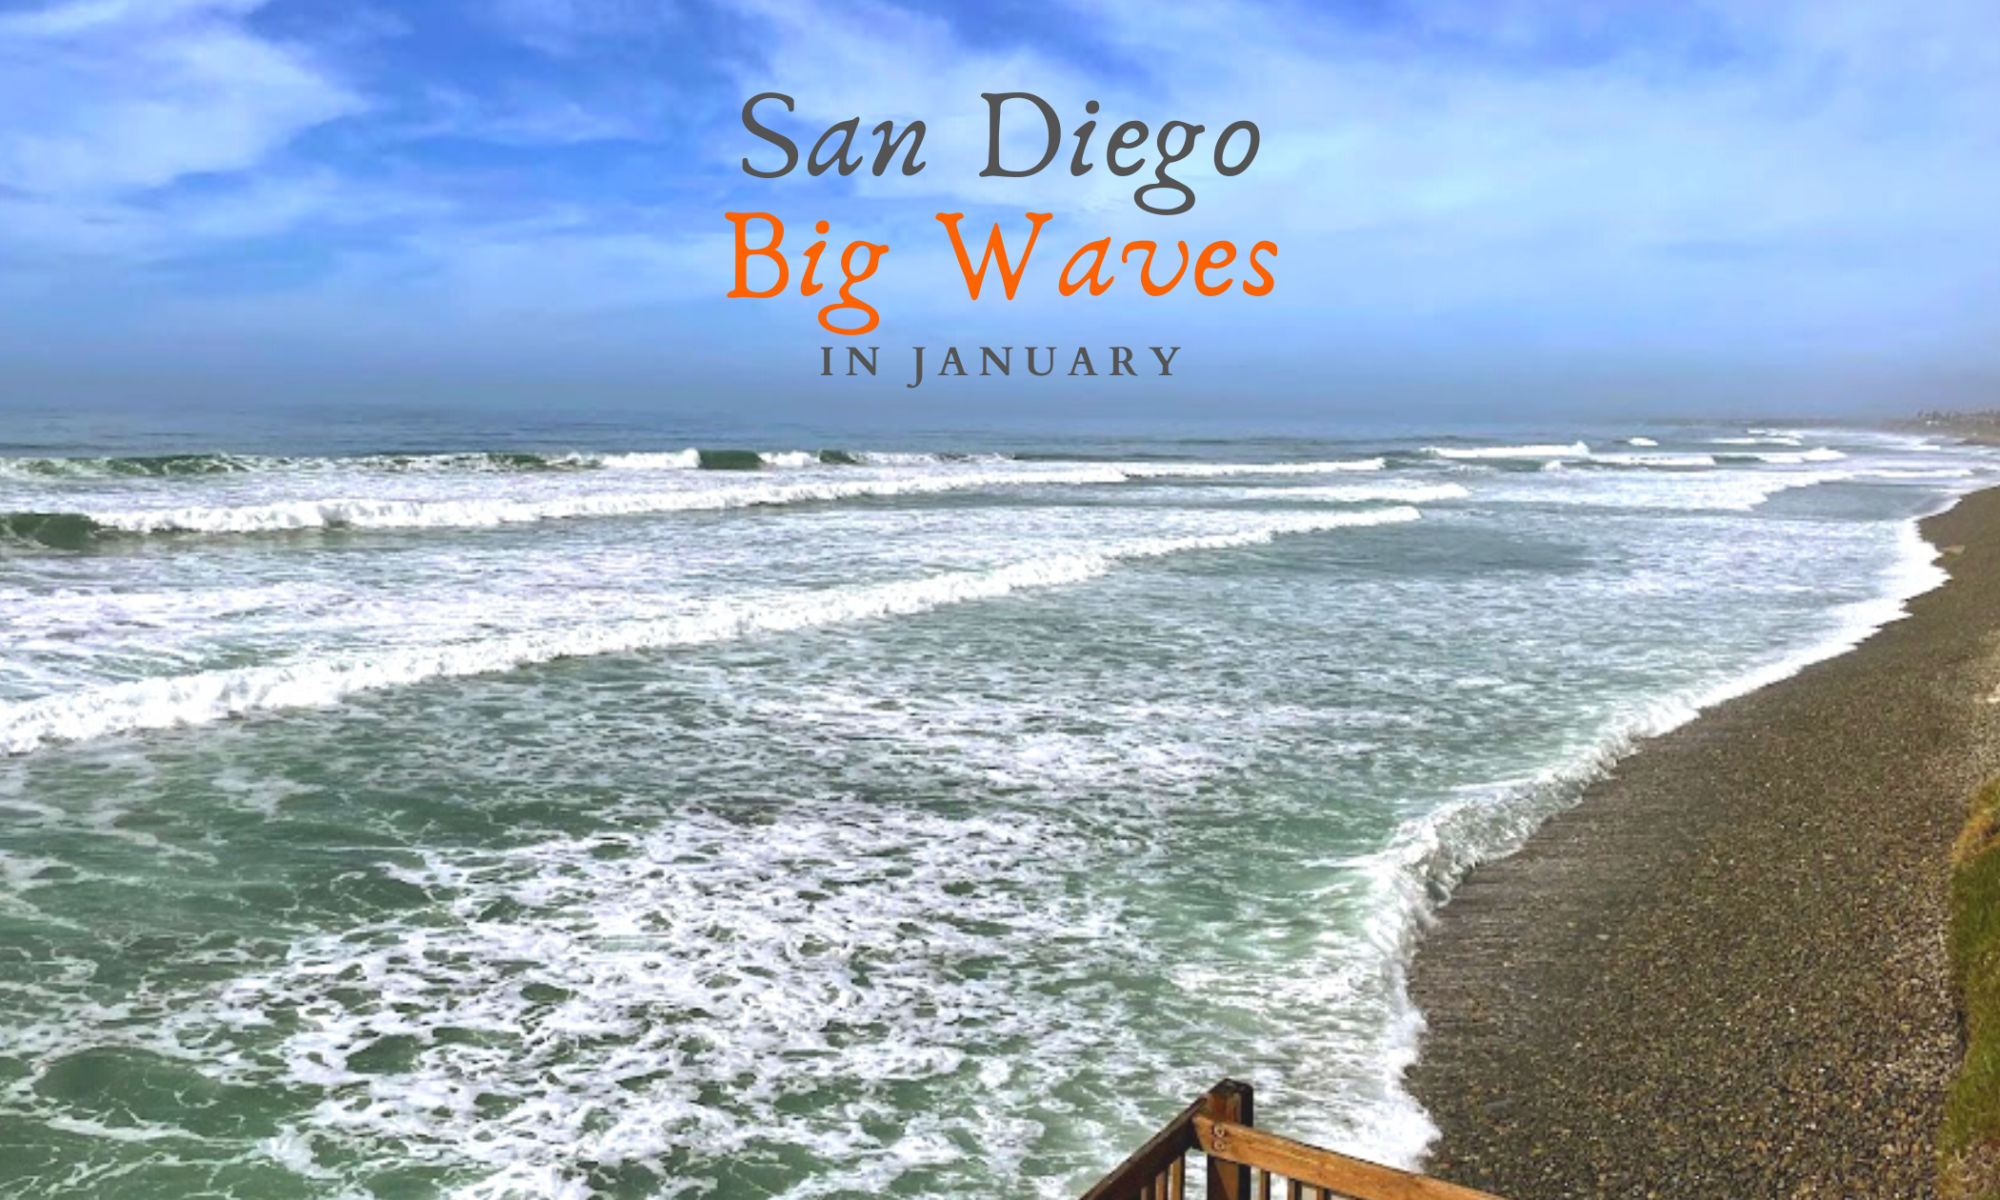 San Diego Big Waves January featured image